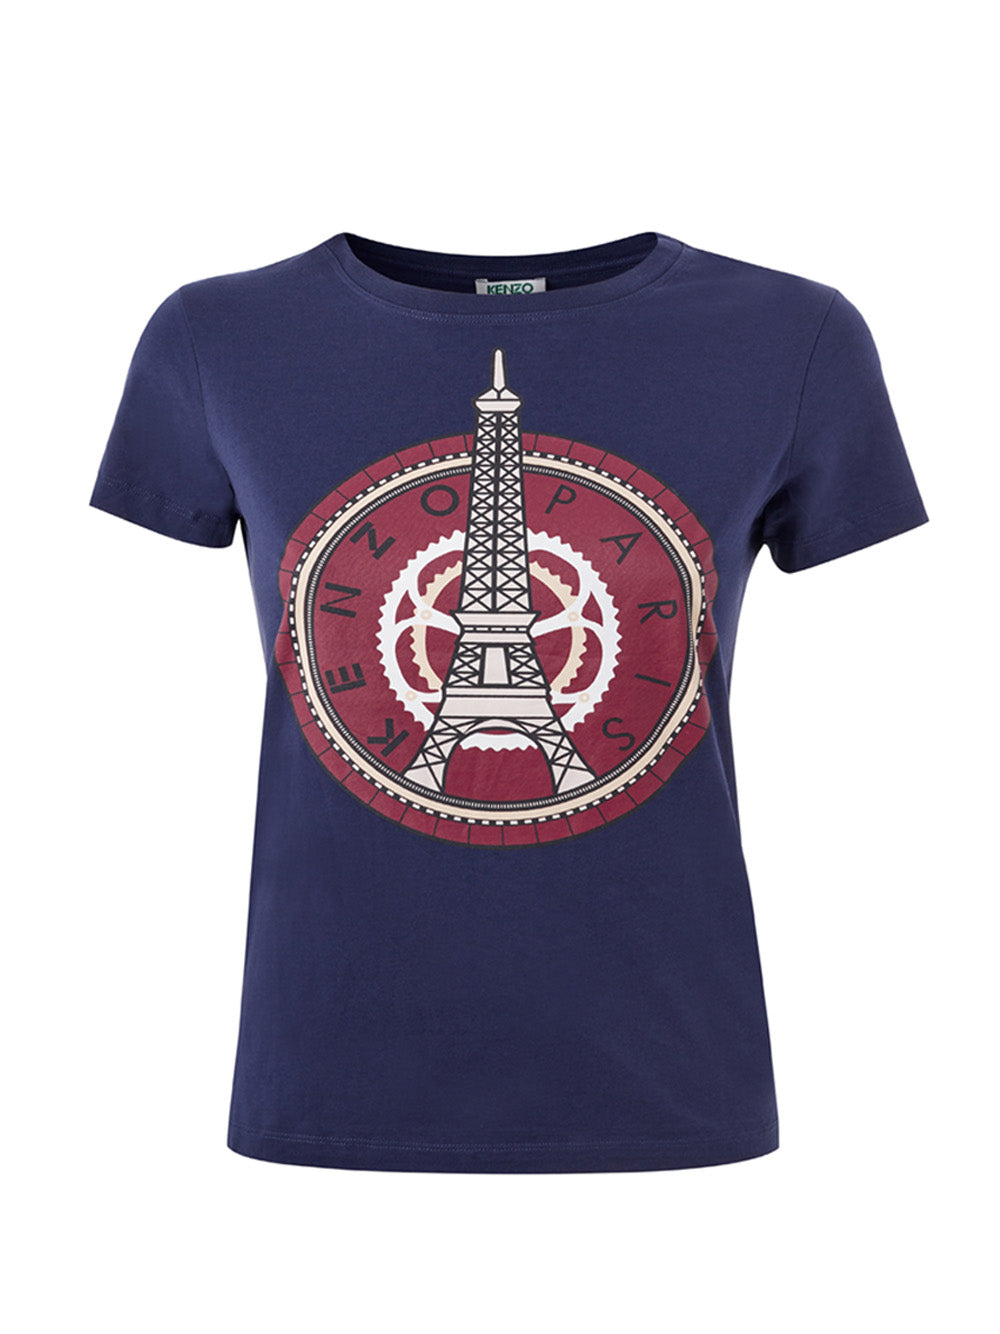 Kenzo Tour Eiffel T-Shirt